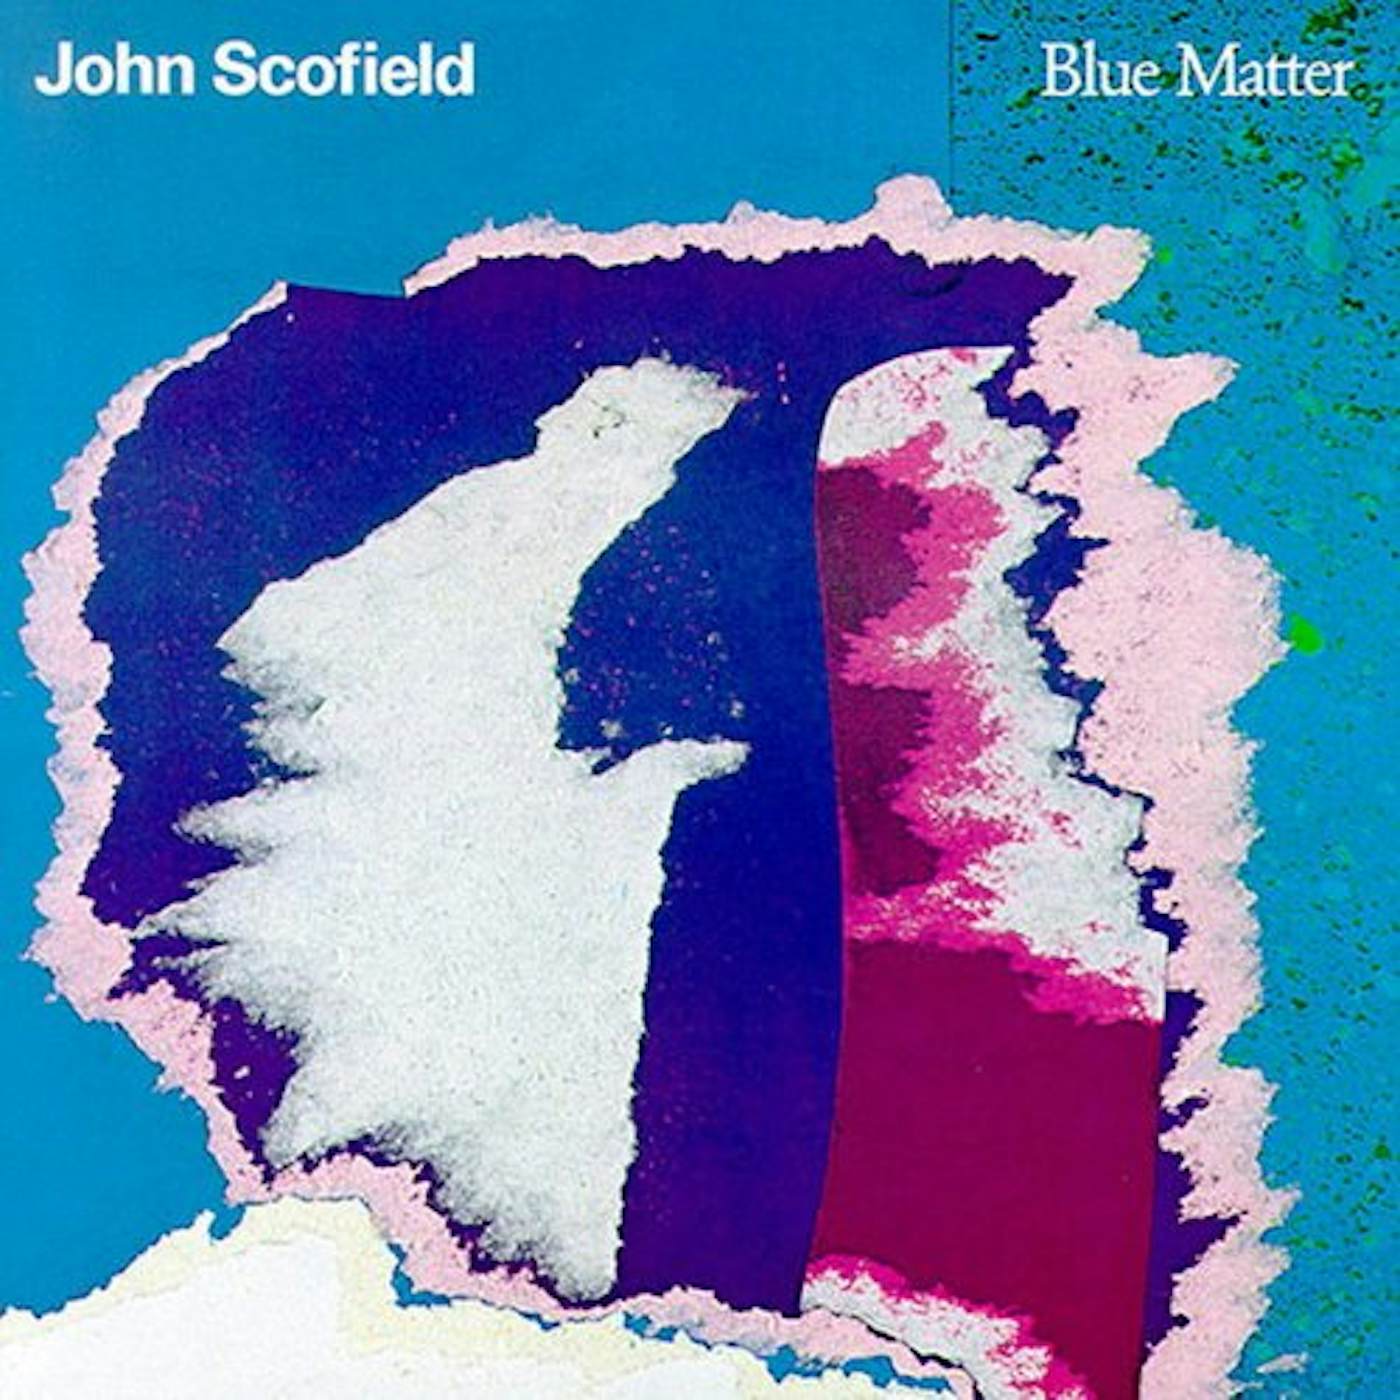 John Scofield BLUE MATTER CD